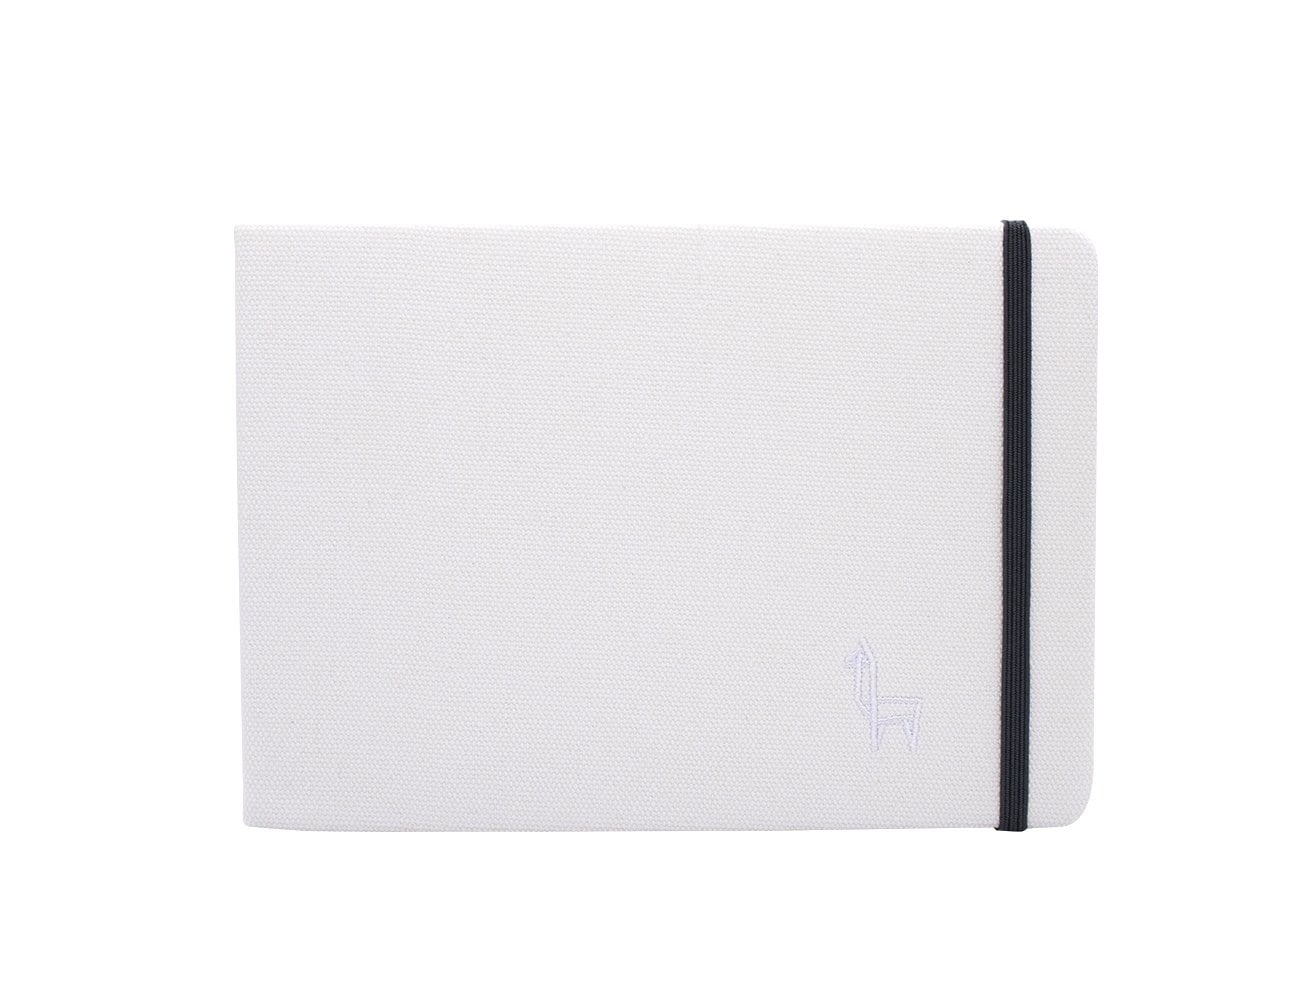 Etchr Mixed Media Hardbound Sketchbook - A4, 8.3 inch x 11.7 inch, Hot Press, Landscape, White